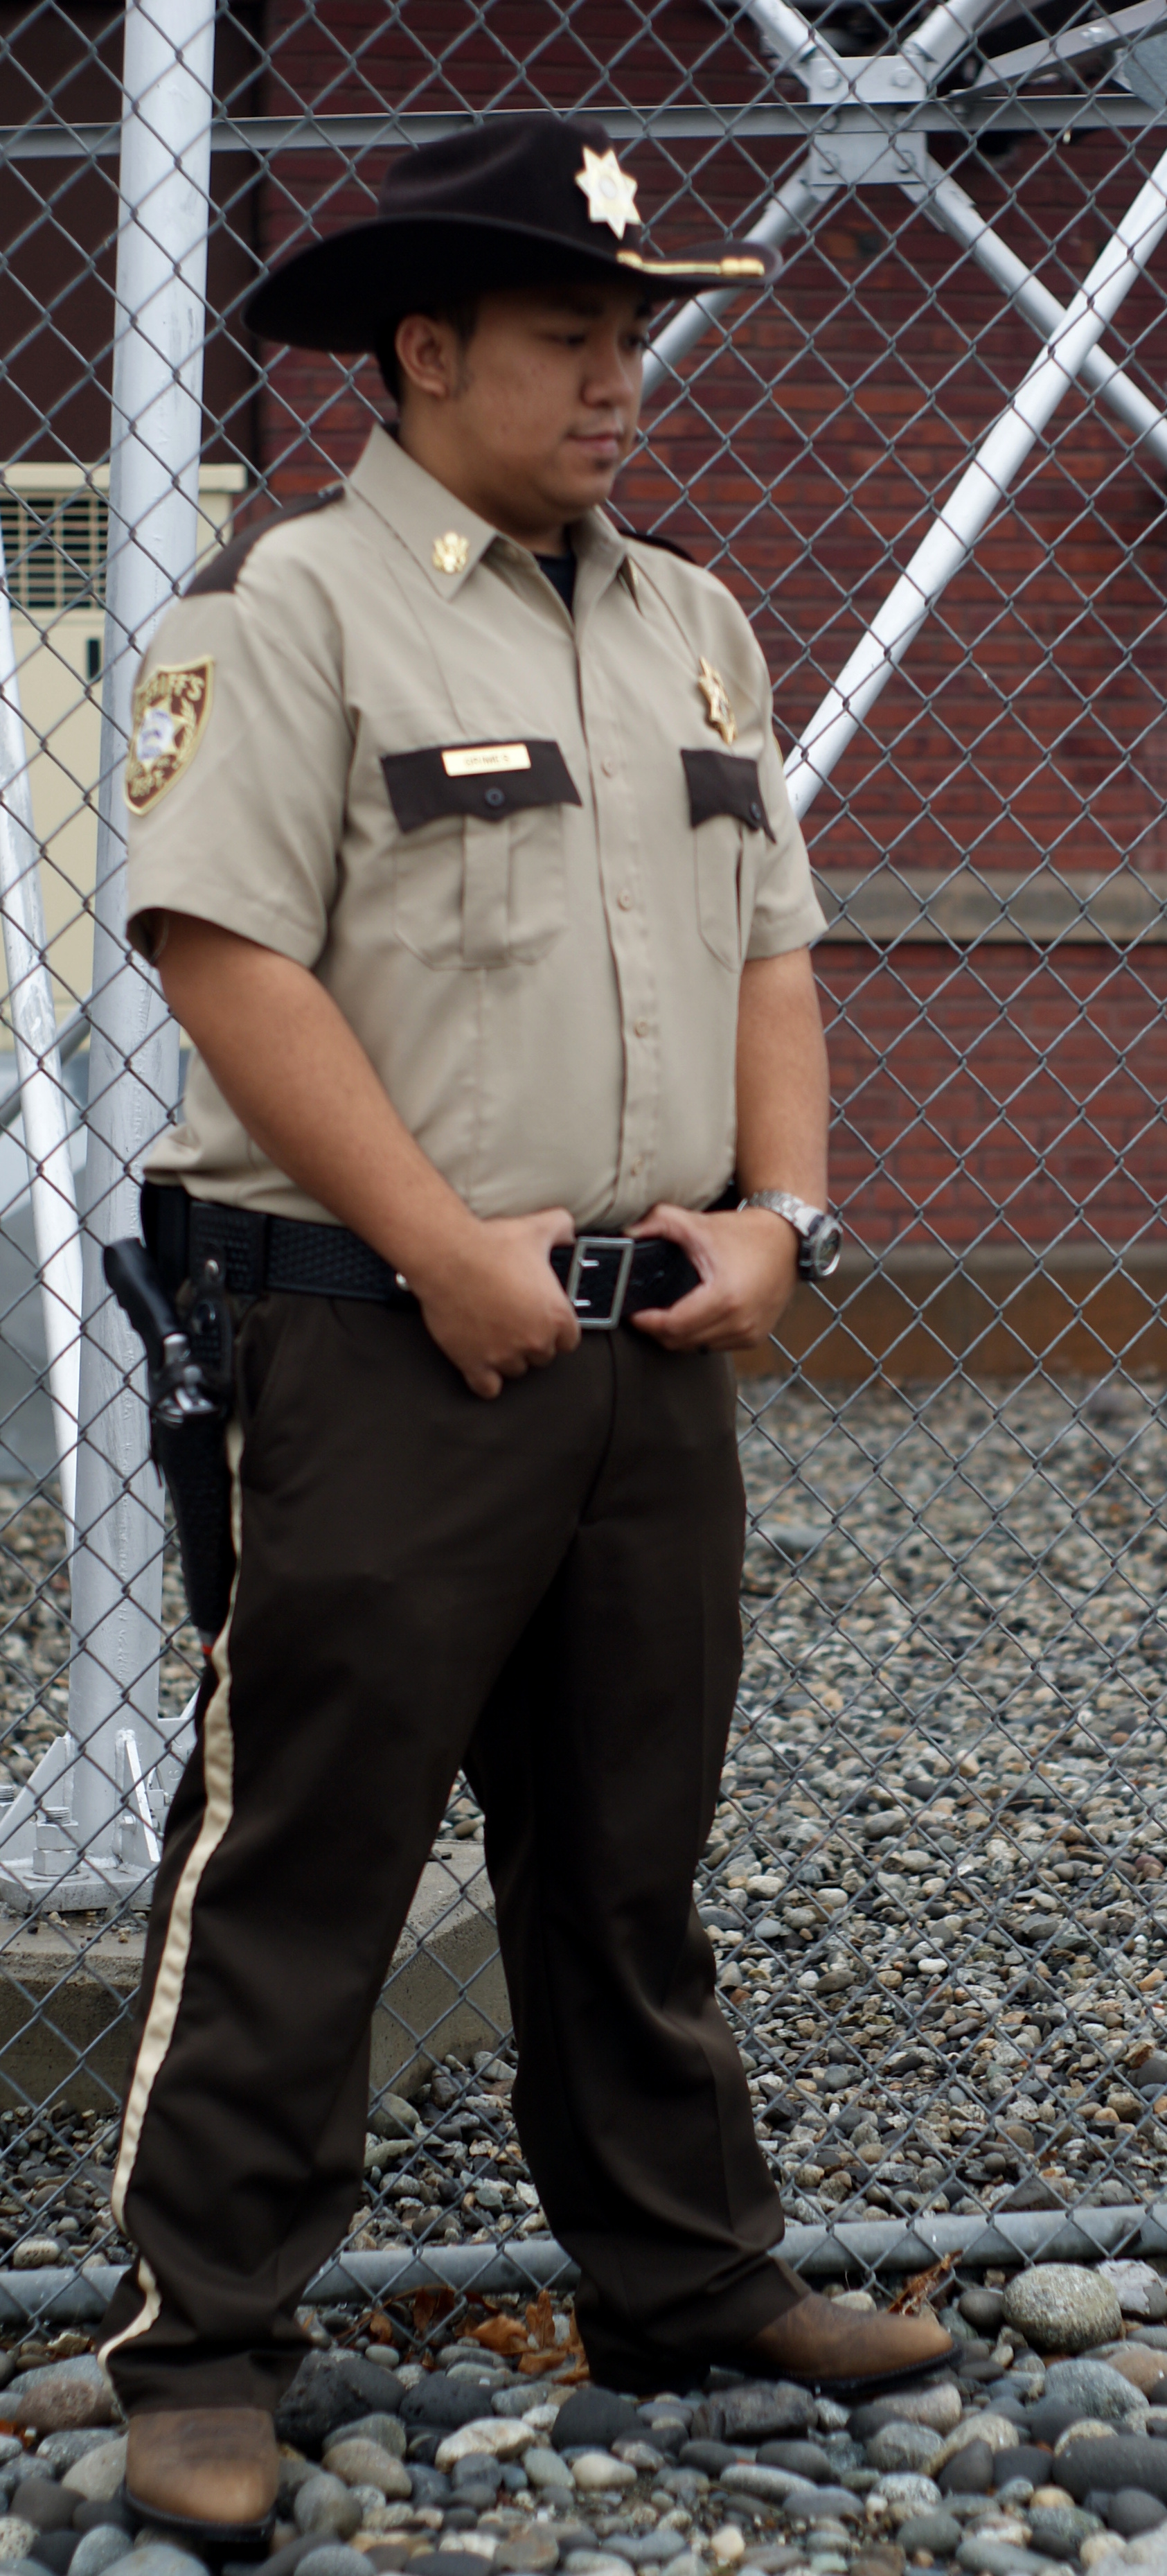 Rick Grimes Deputy Sheriff